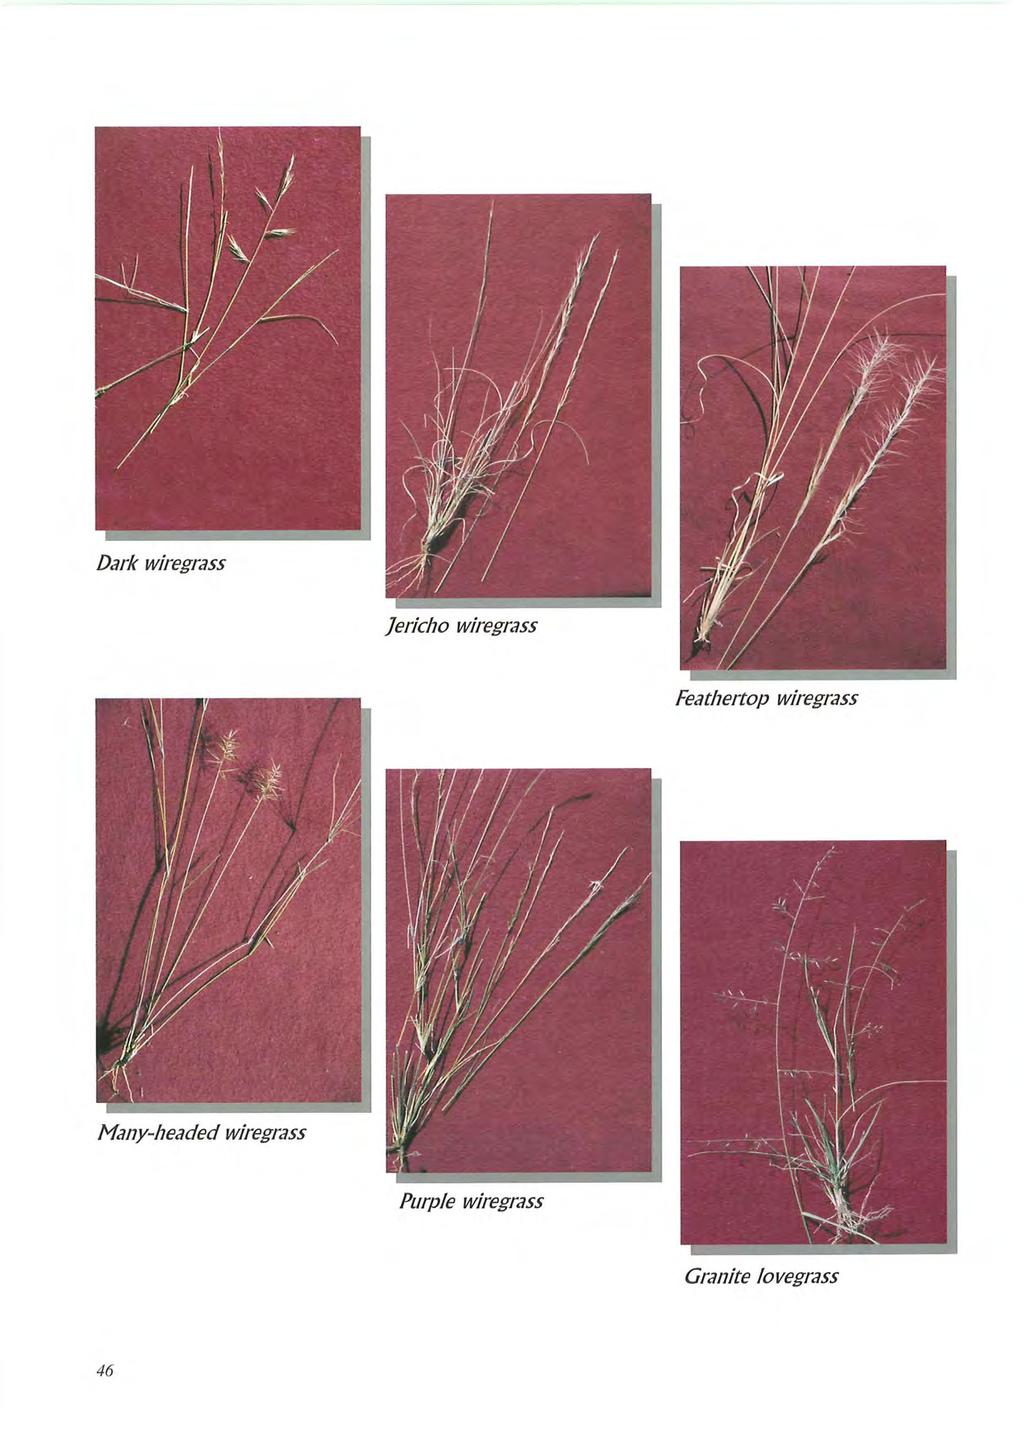 Jericho wiregrass Feathertop